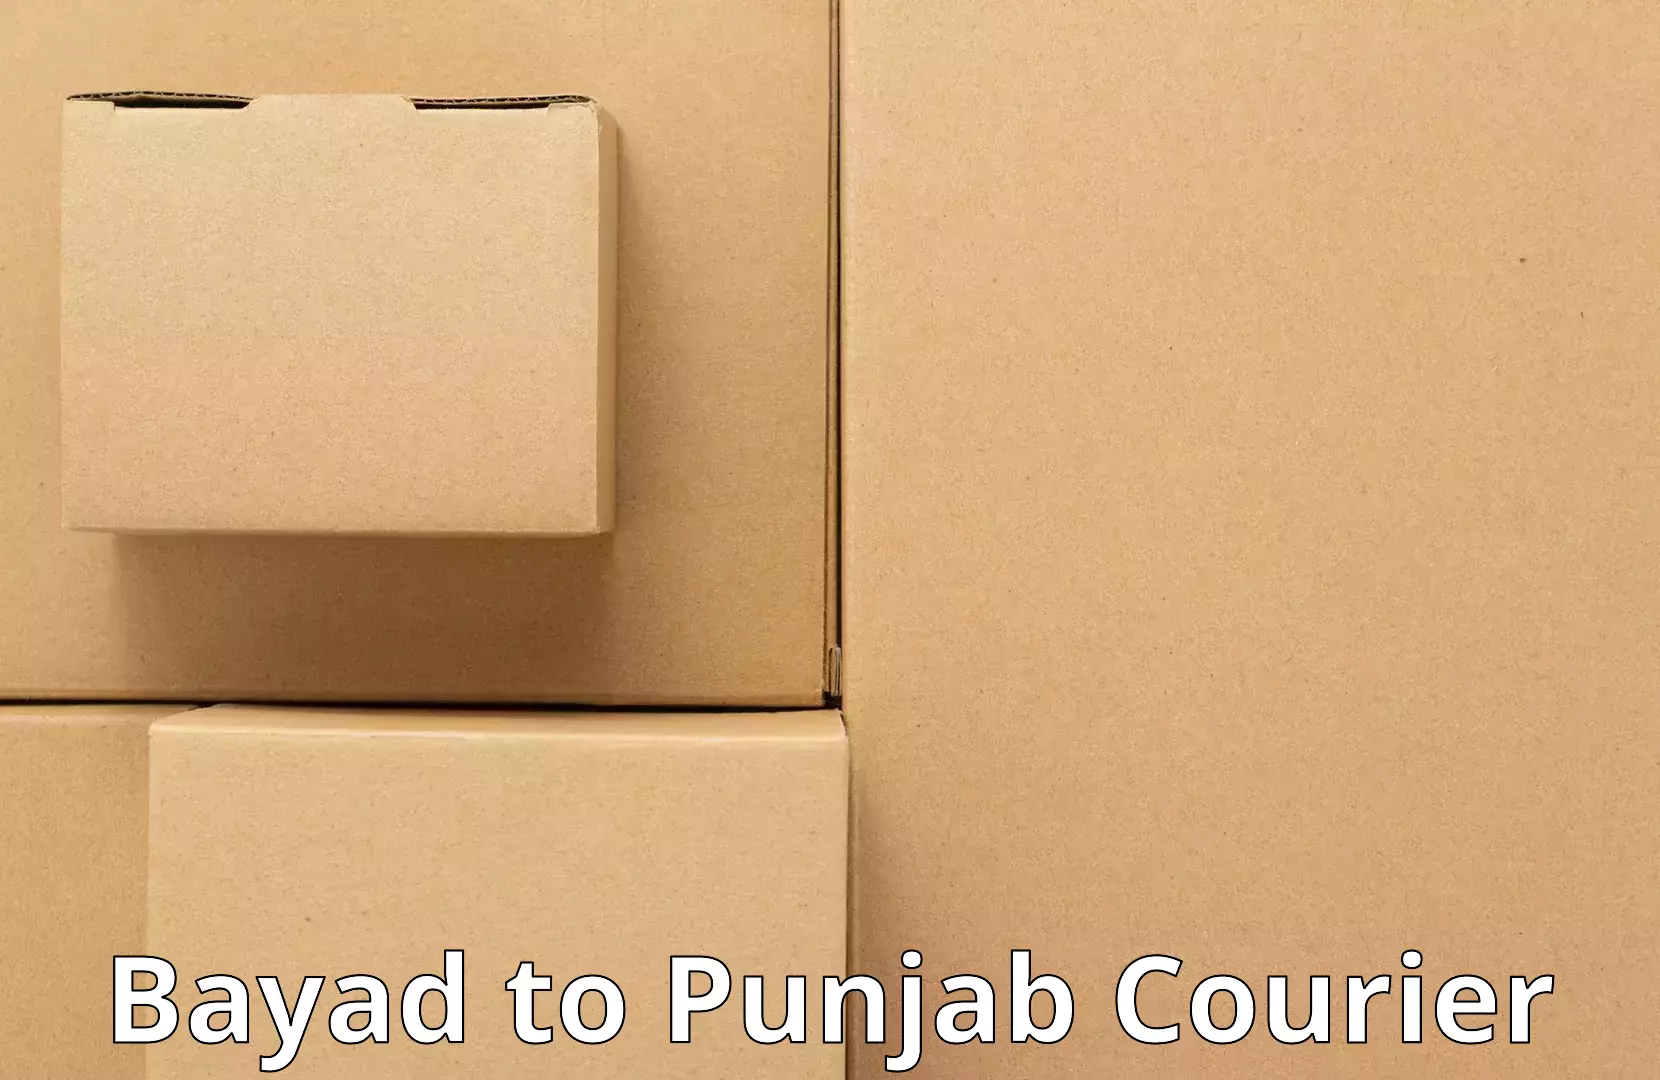 Seamless moving process Bayad to Punjab